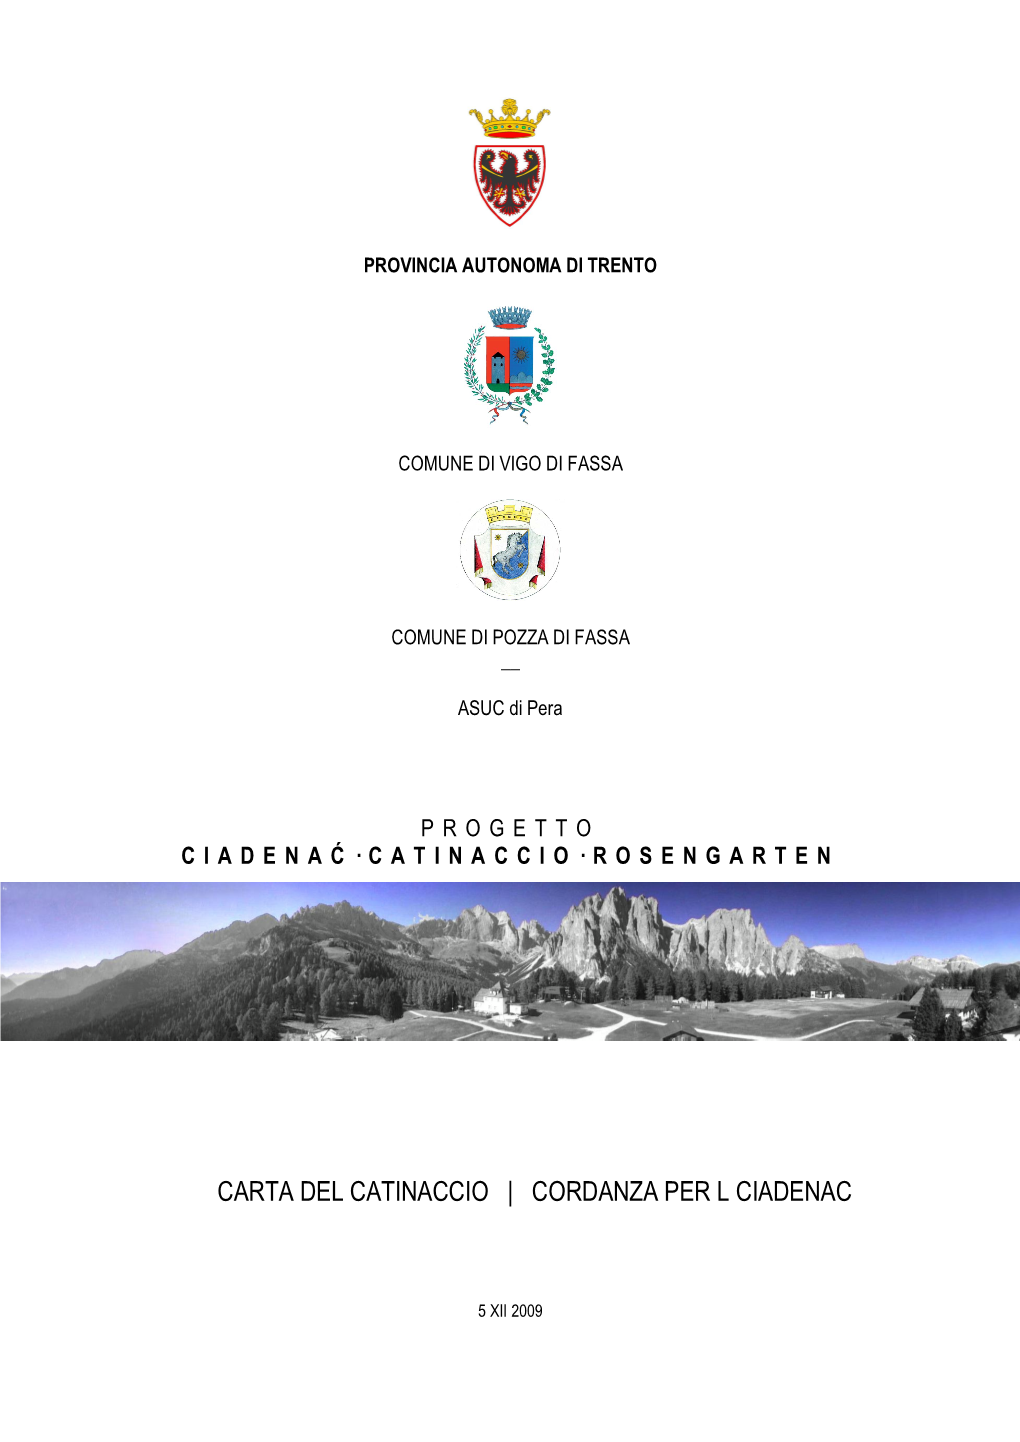 Carta Del Catinaccio | Cordanza Per L Ciadenac